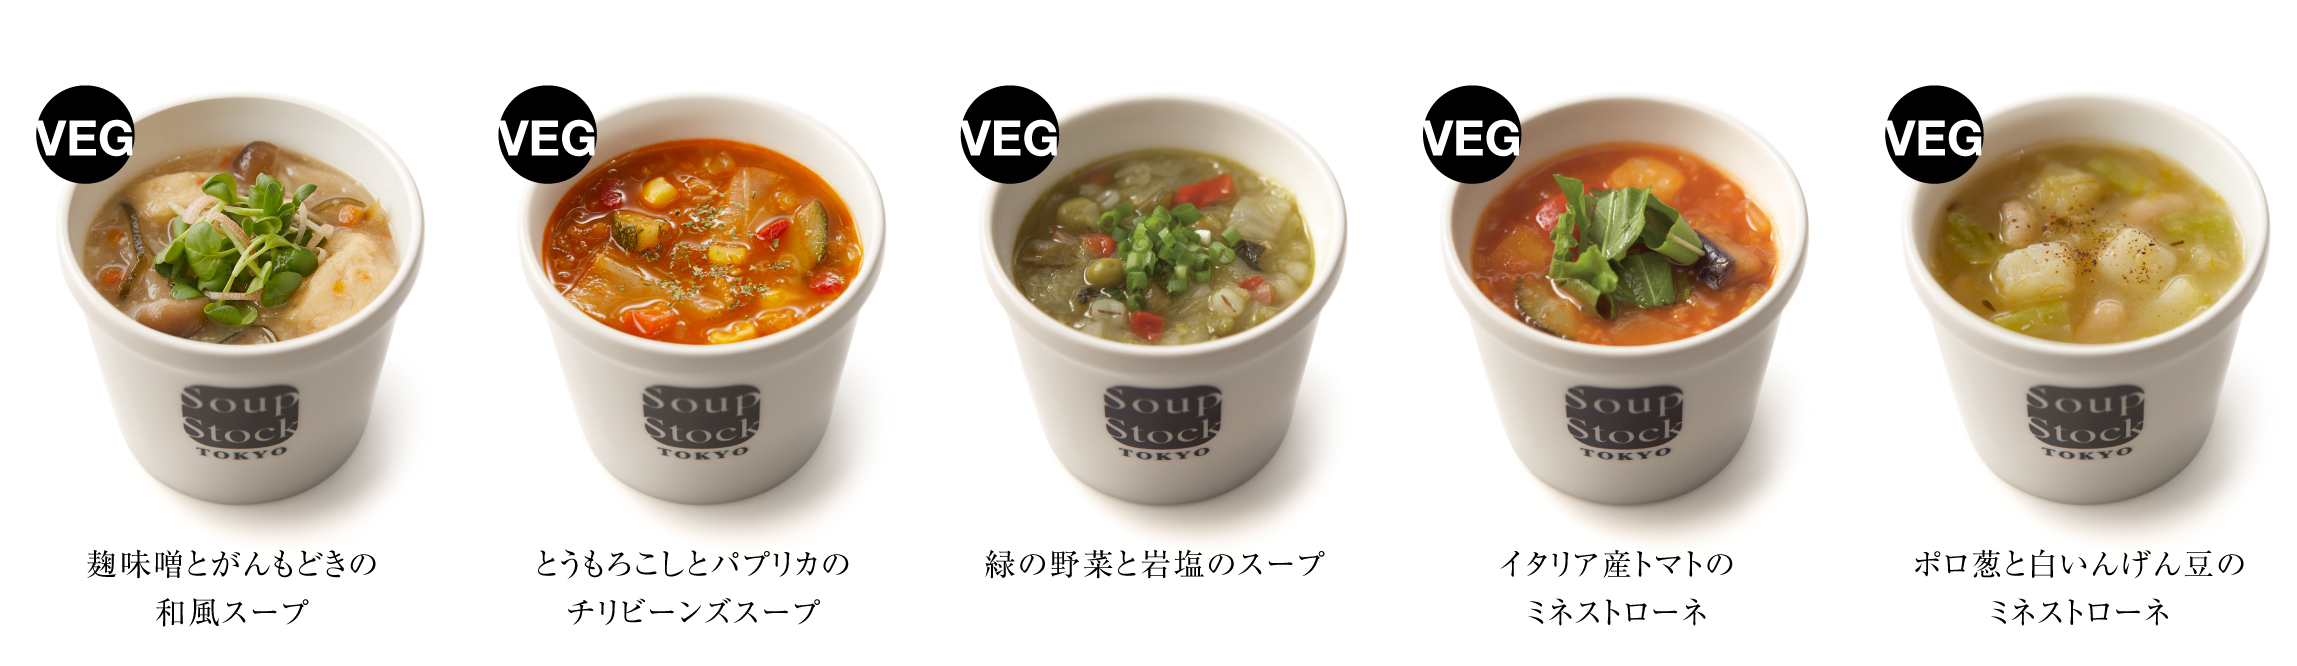 Soup Stock Tokyo は食のバリアフリーを推進します Soup Stock Tokyo スープストックトーキョー